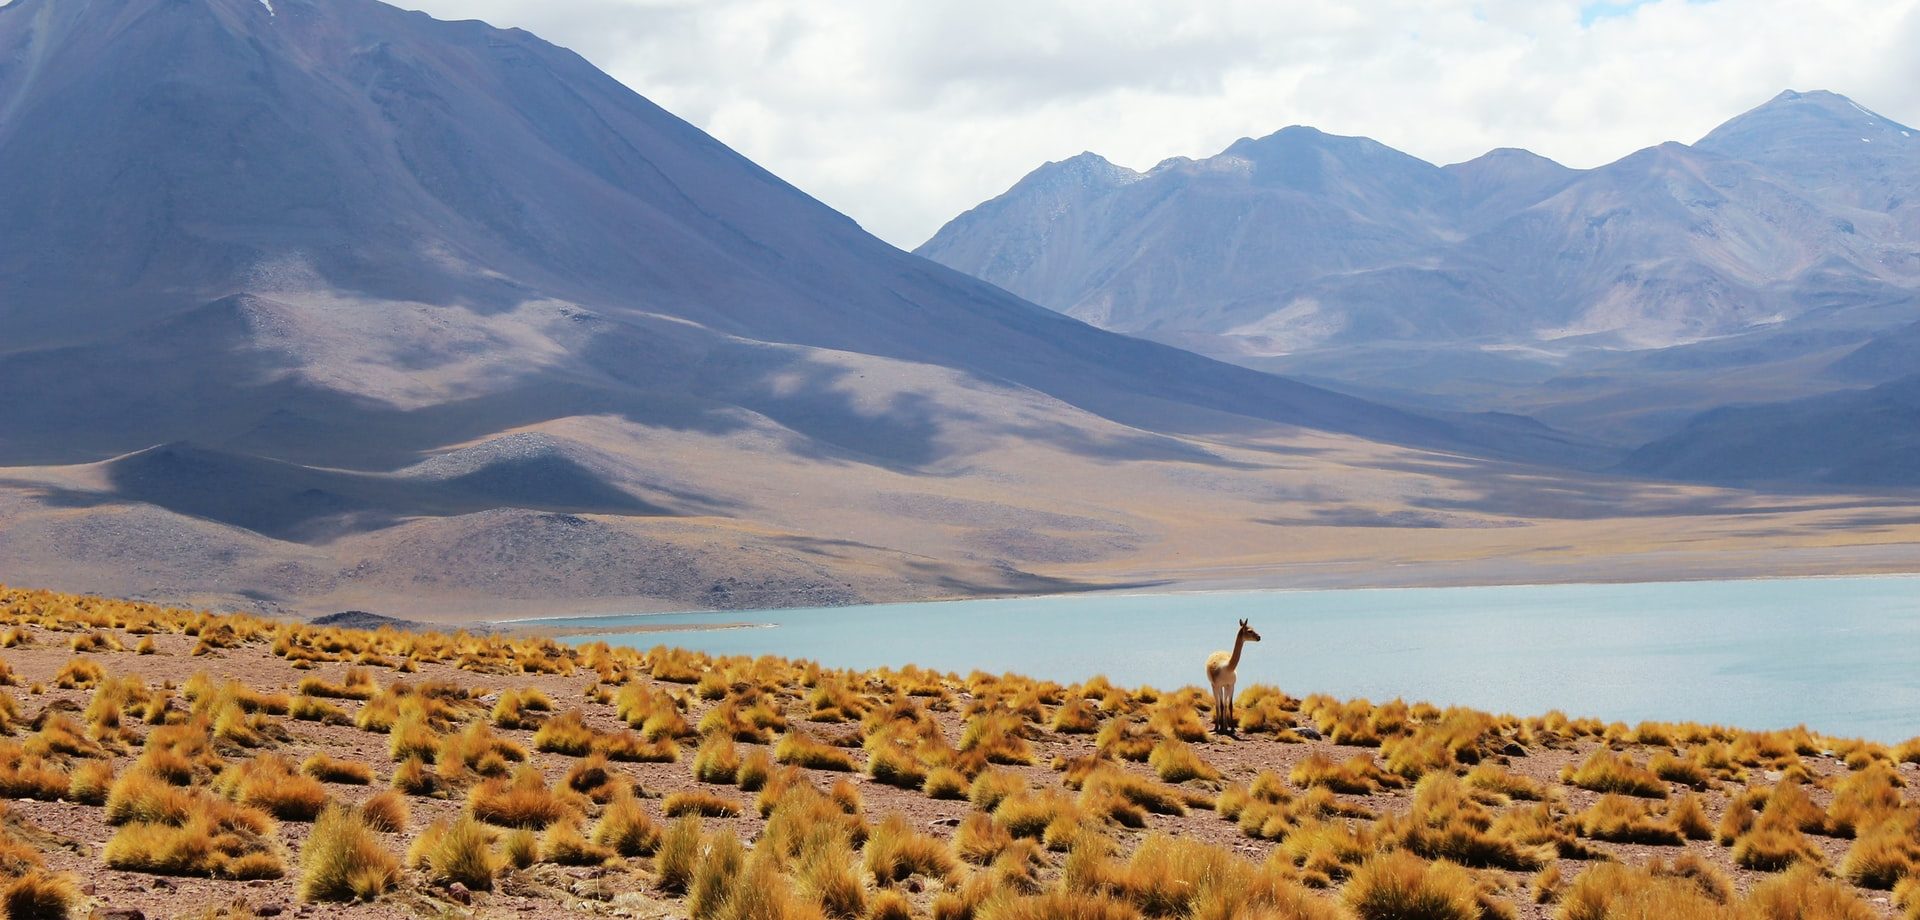 Television programmes to support Chilean rural tourism entrepreneurs